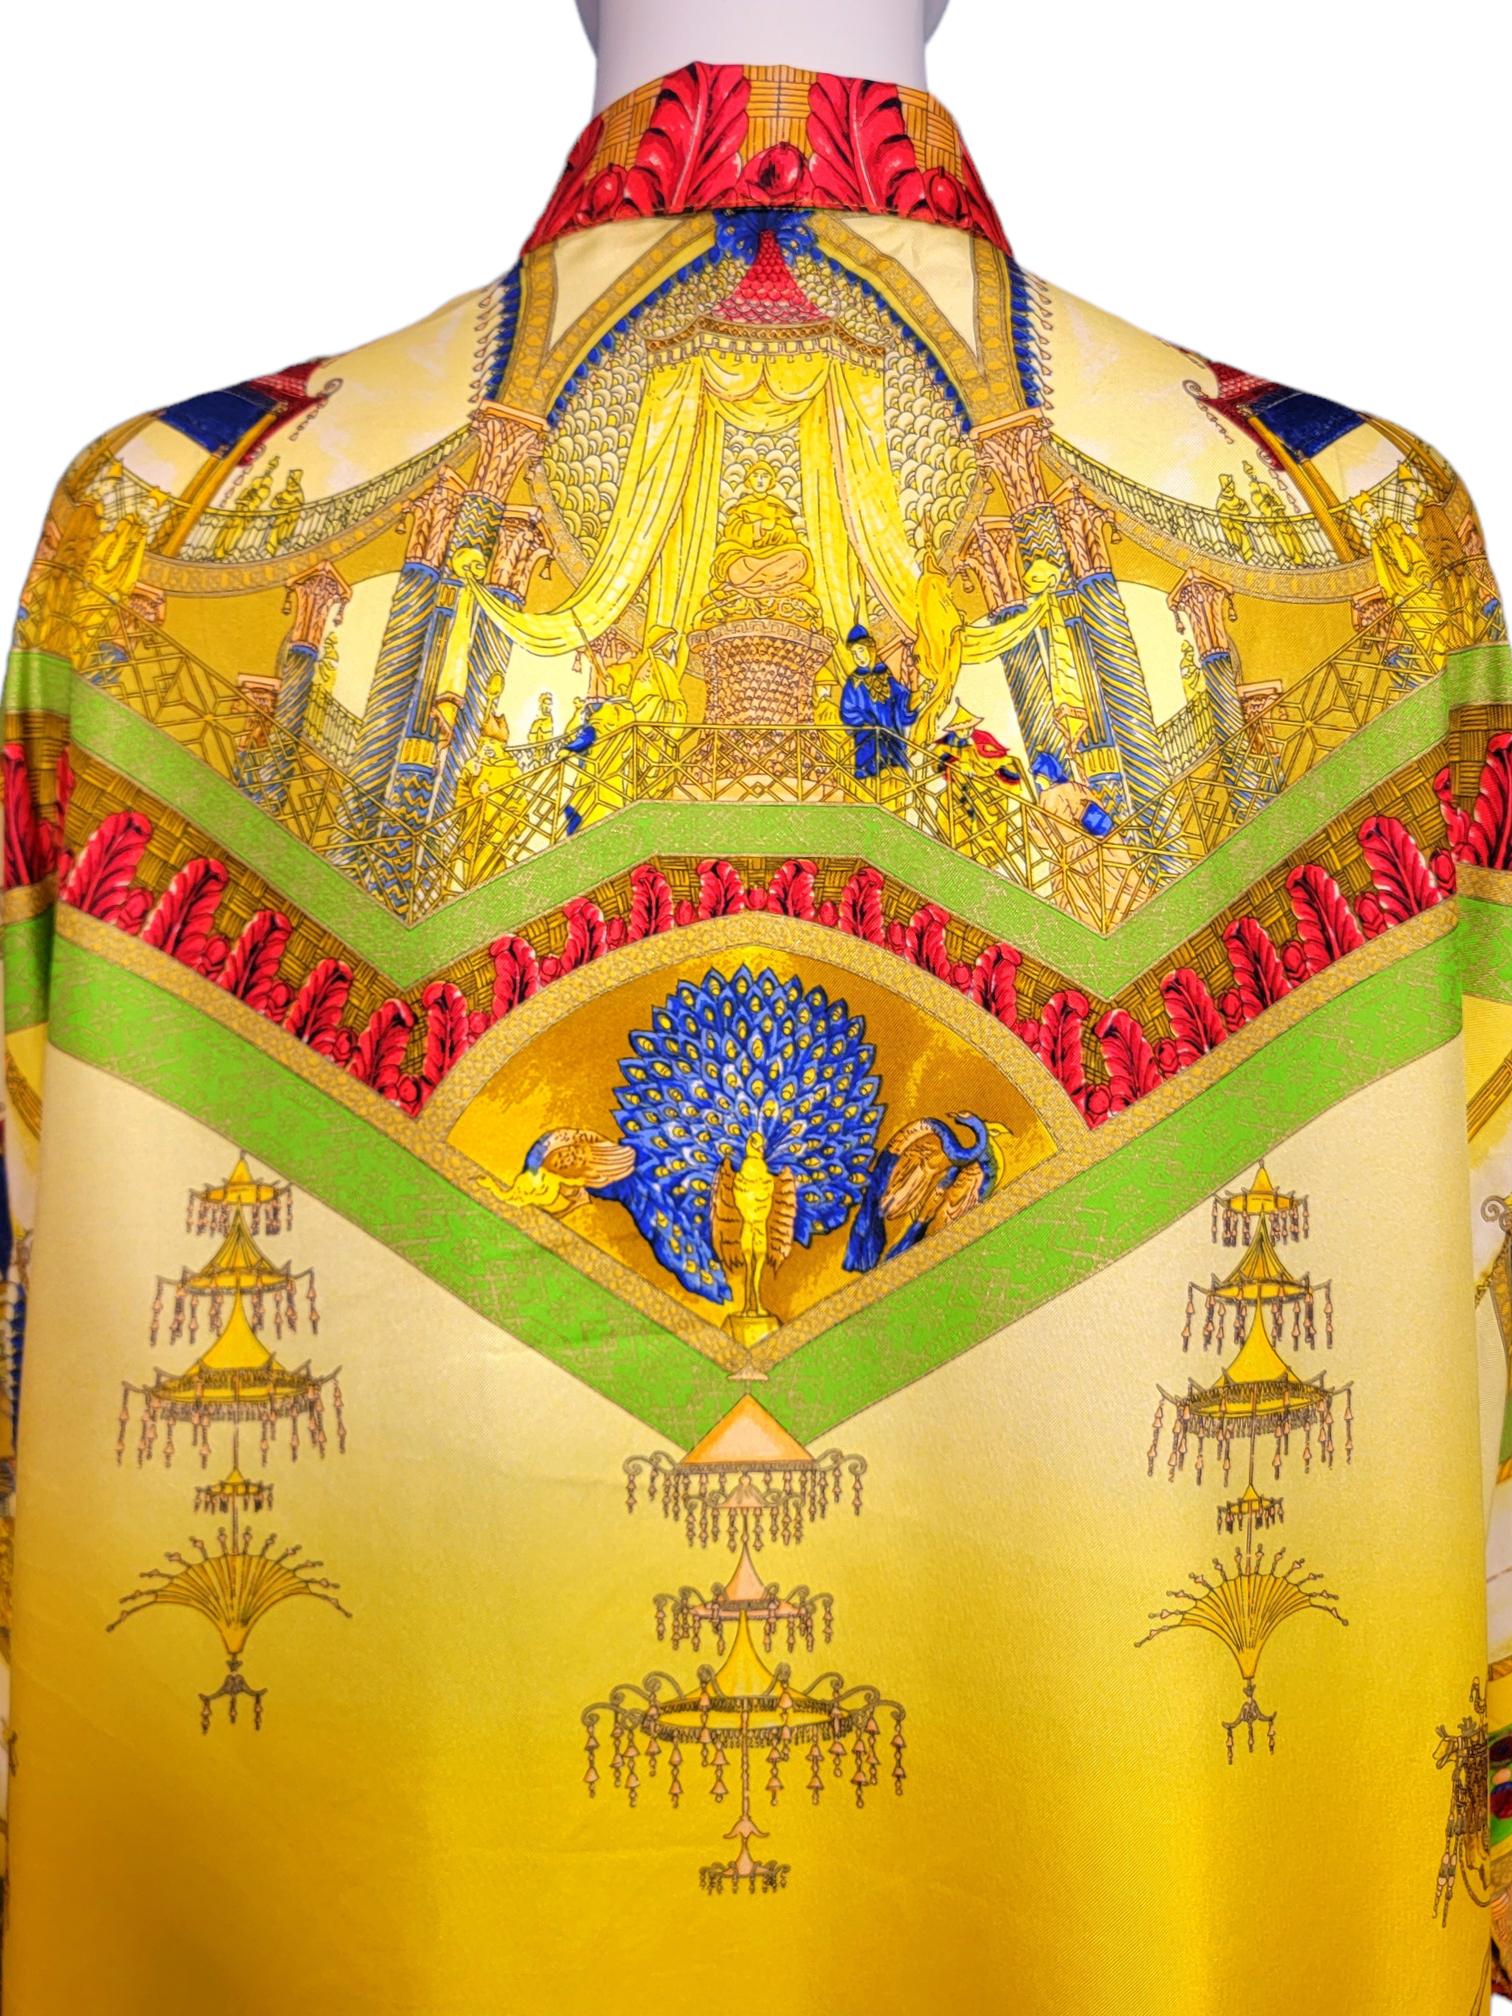 Gianni Versace Marco Polo Silk Shirt Chinese Emperor Peacocks 1992  2